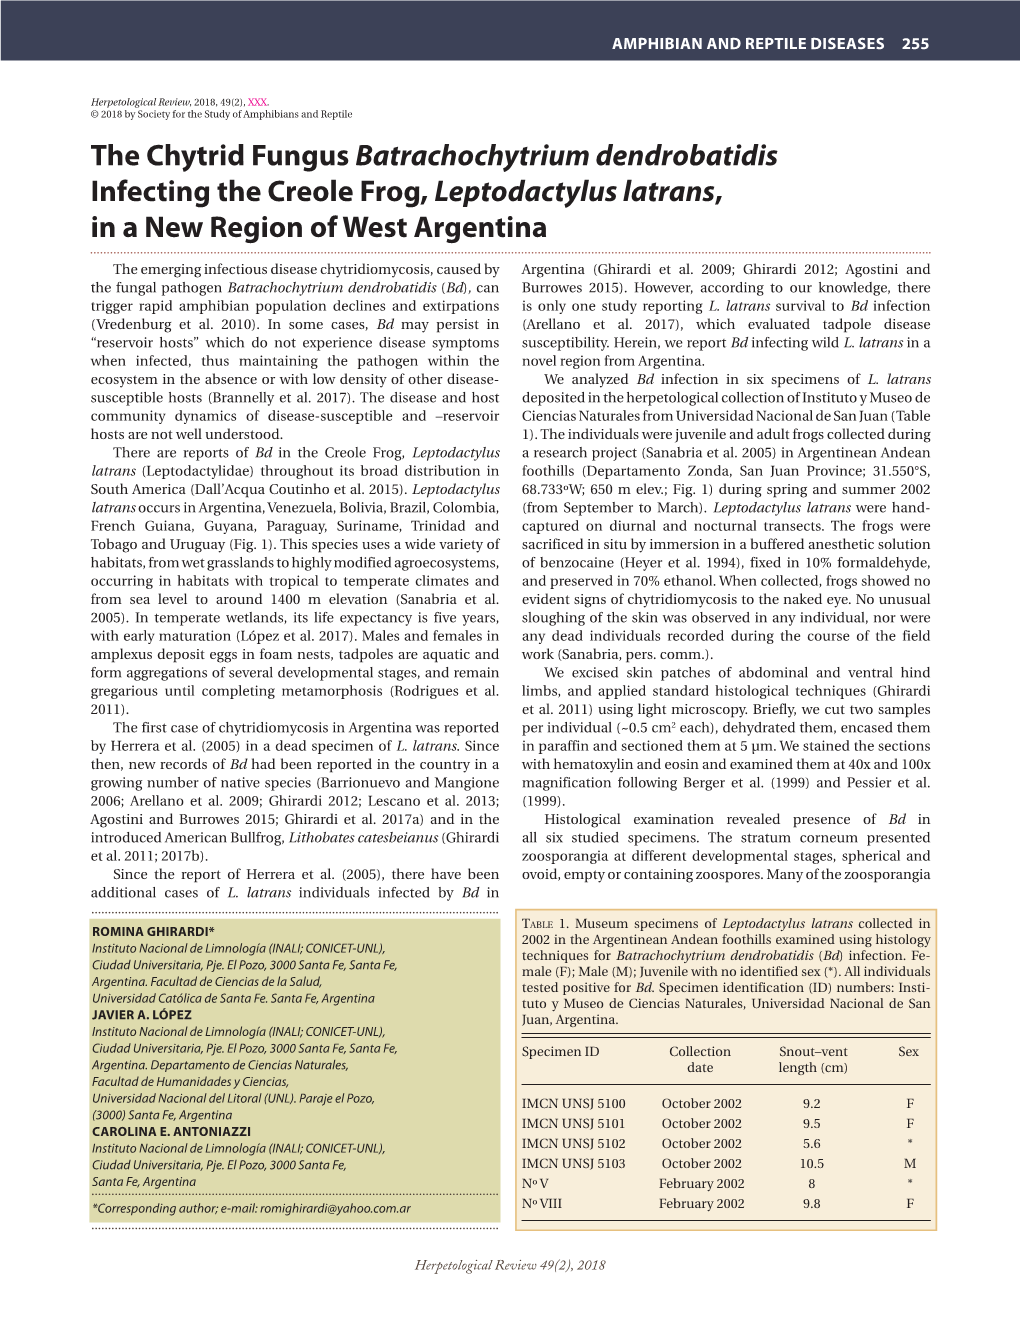 The Chytrid Fungus Batrachochytrium Dendrobatidis Infecting the Creole Frog, Leptodactylus Latrans, in a New Region of West Argentina